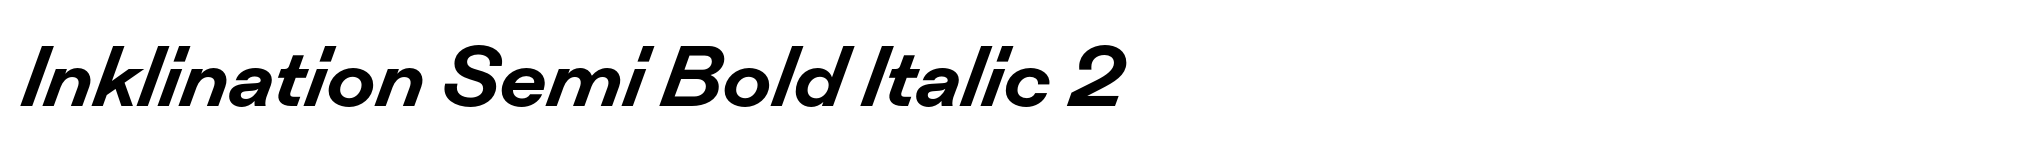 Inklination Semi Bold Italic 2 image